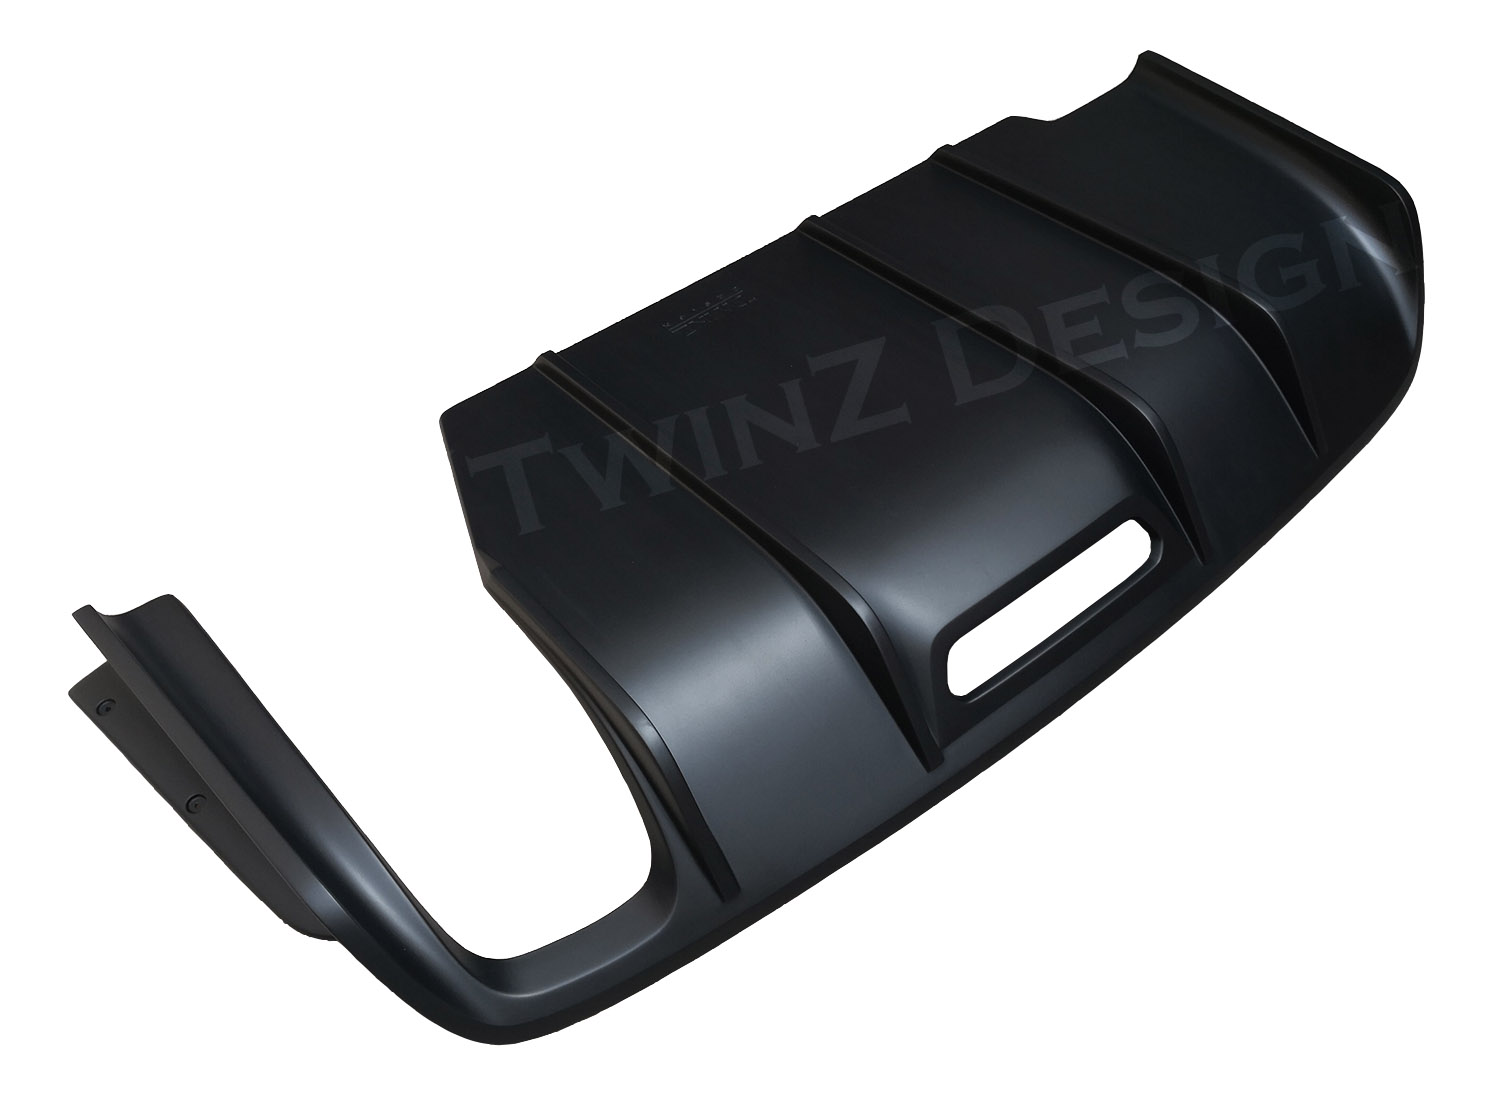 TwinZ RX7 diffuser